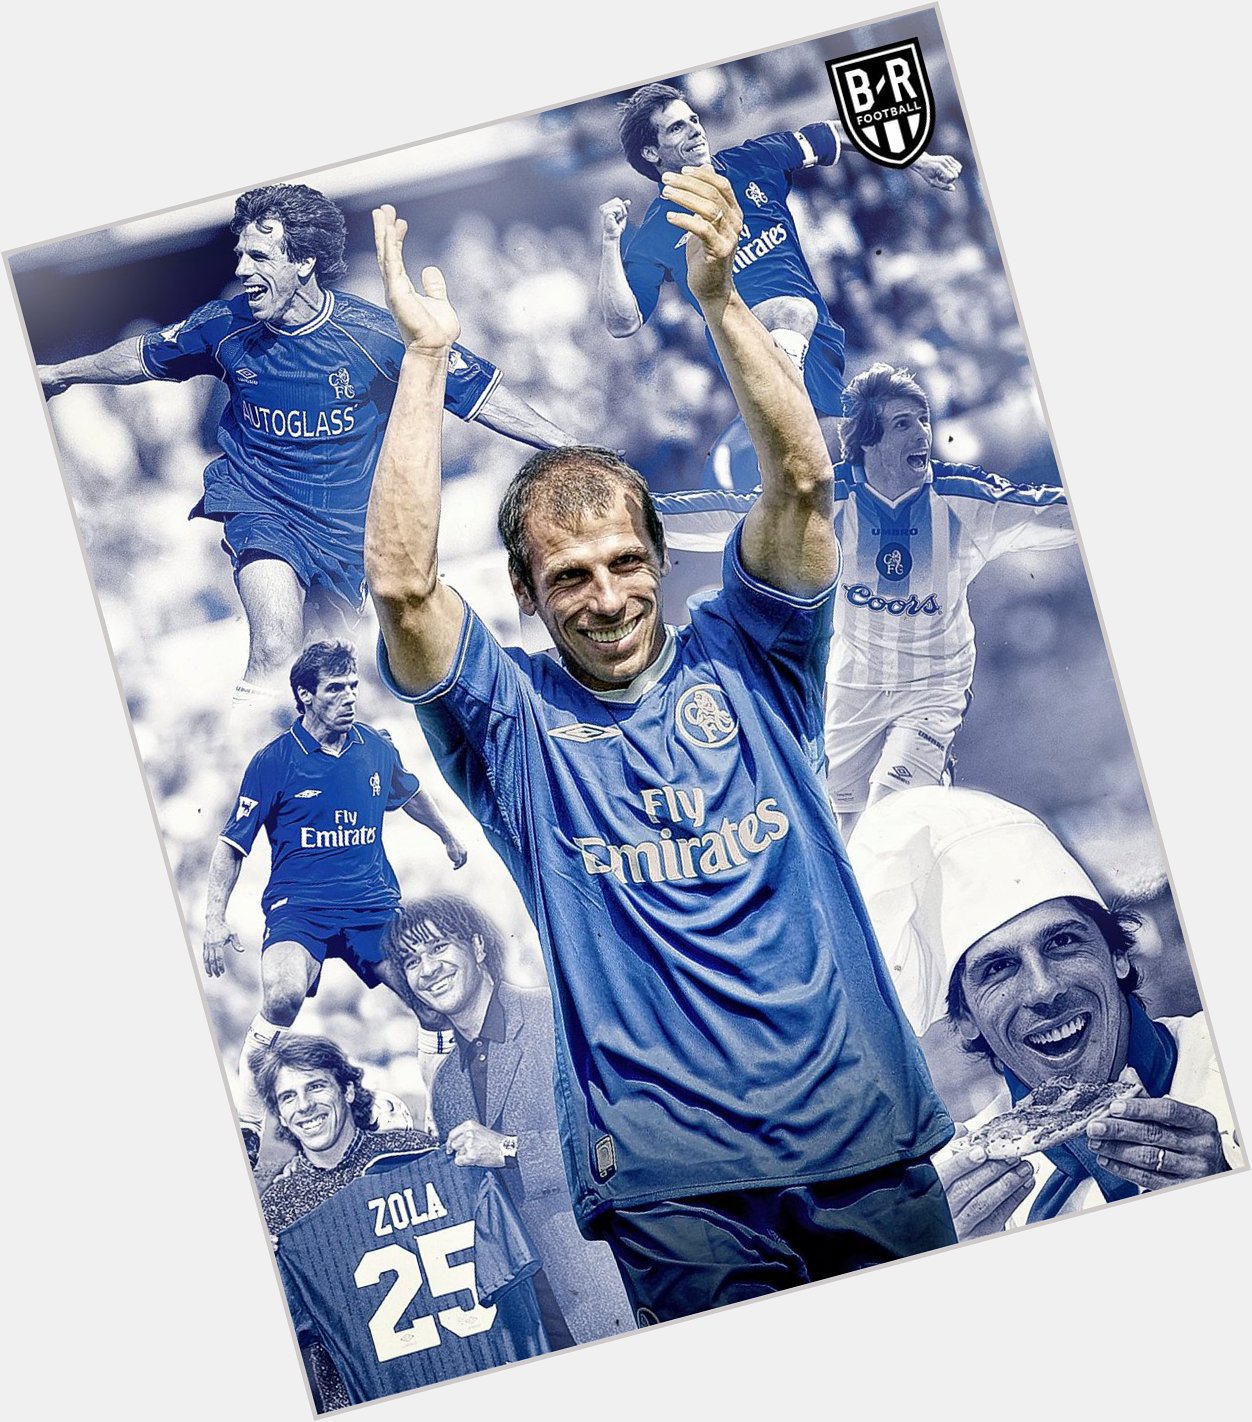 Happy 55th birthday to Chelsea legend Gianfranco Zola  